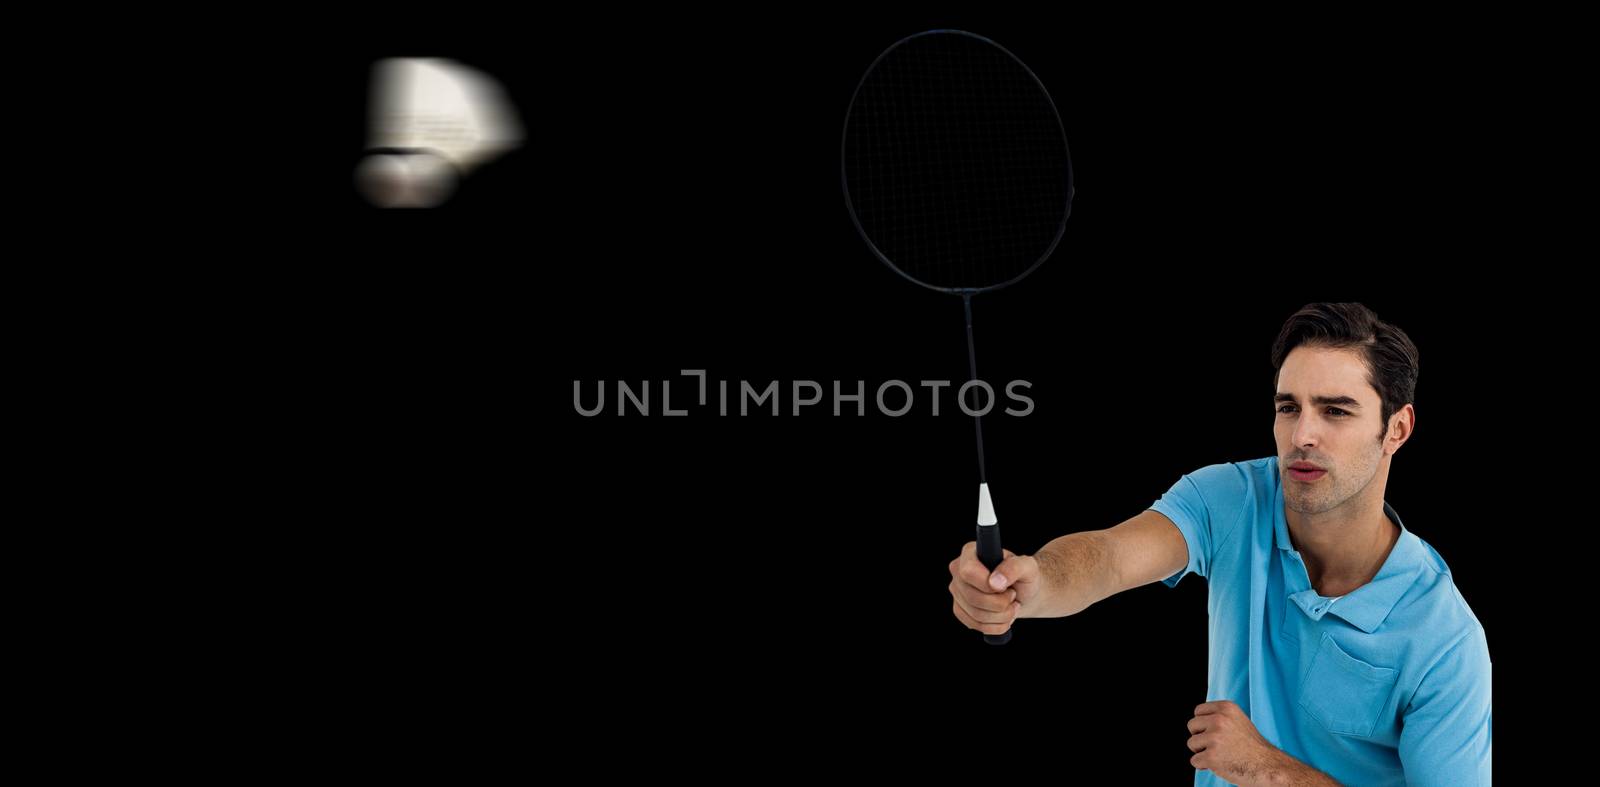 Badminton player playing badminton by Wavebreakmedia